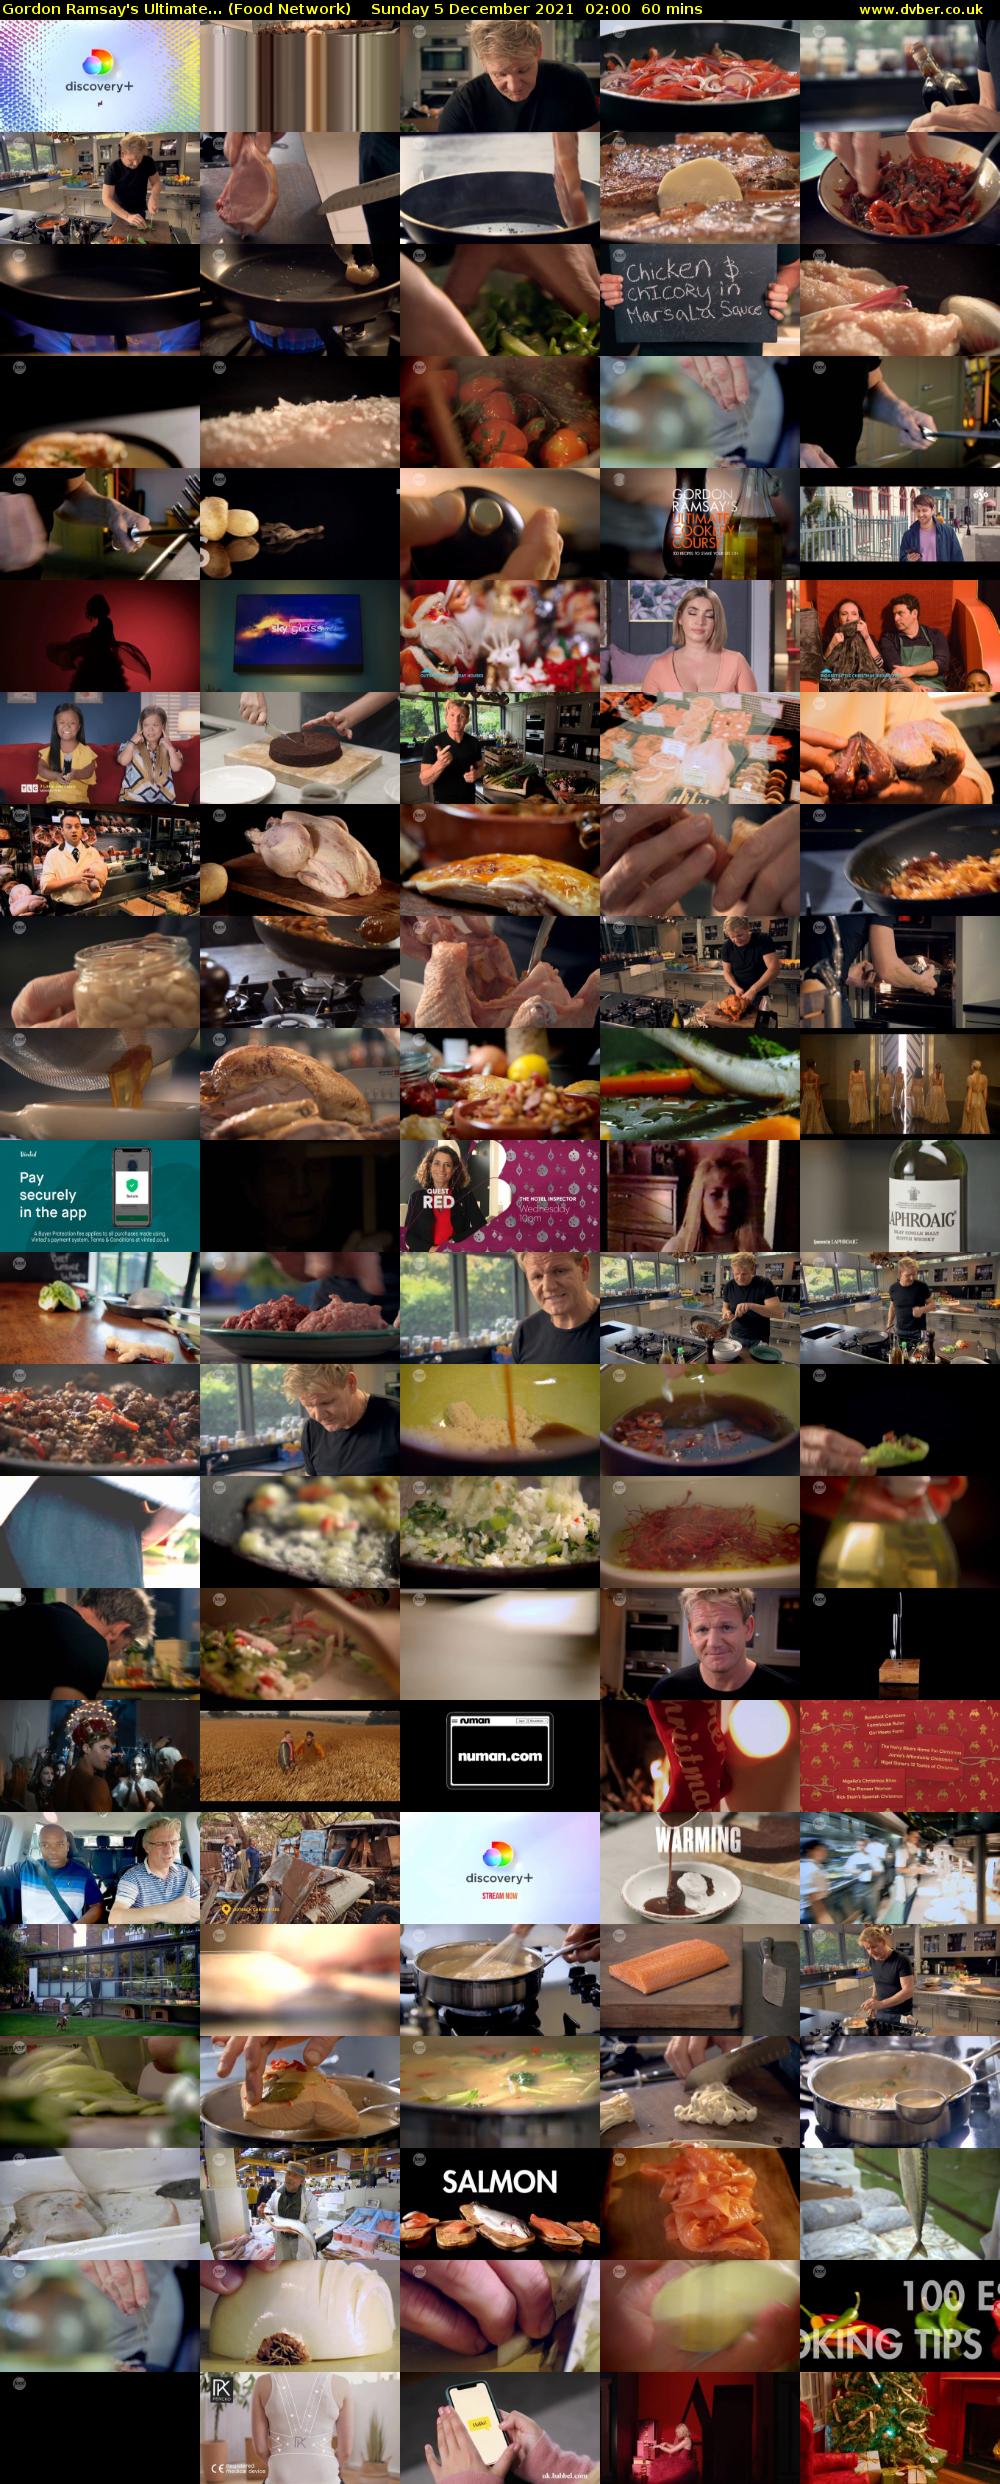 Gordon Ramsay's Ultimate... (Food Network) Sunday 5 December 2021 02:00 - 03:00